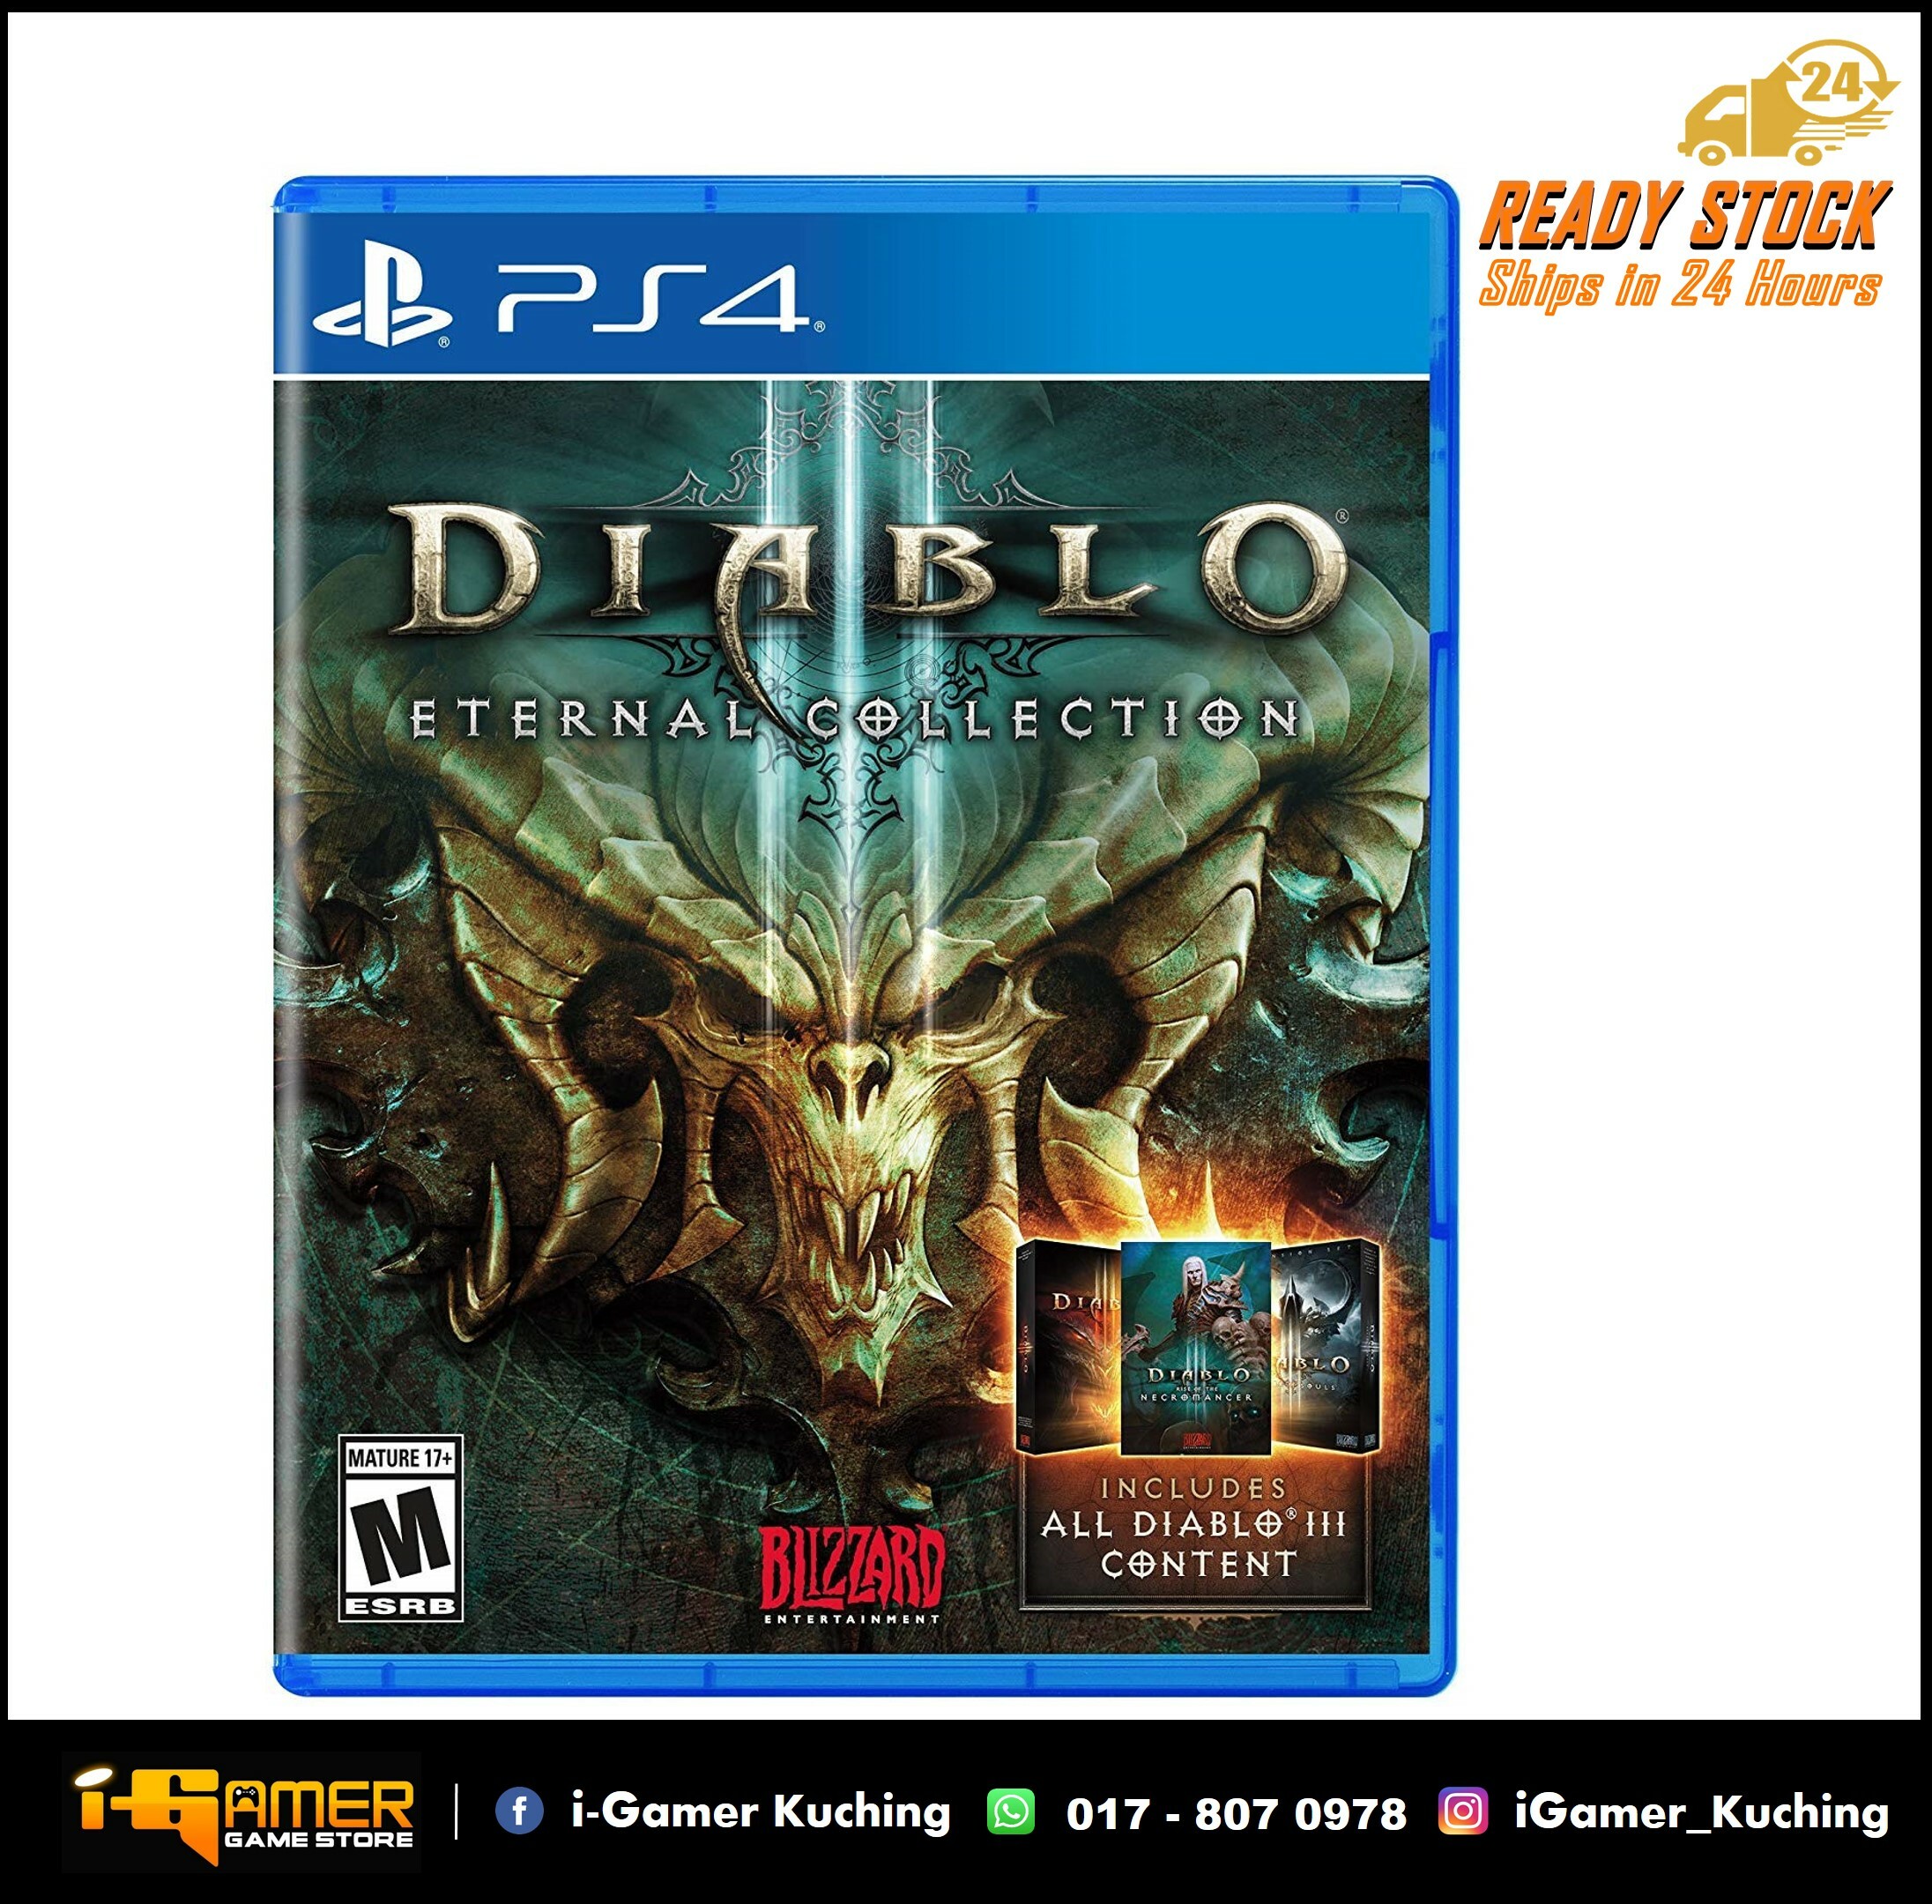 (PS5) Diablo 4 (R1 ENG/CHN)